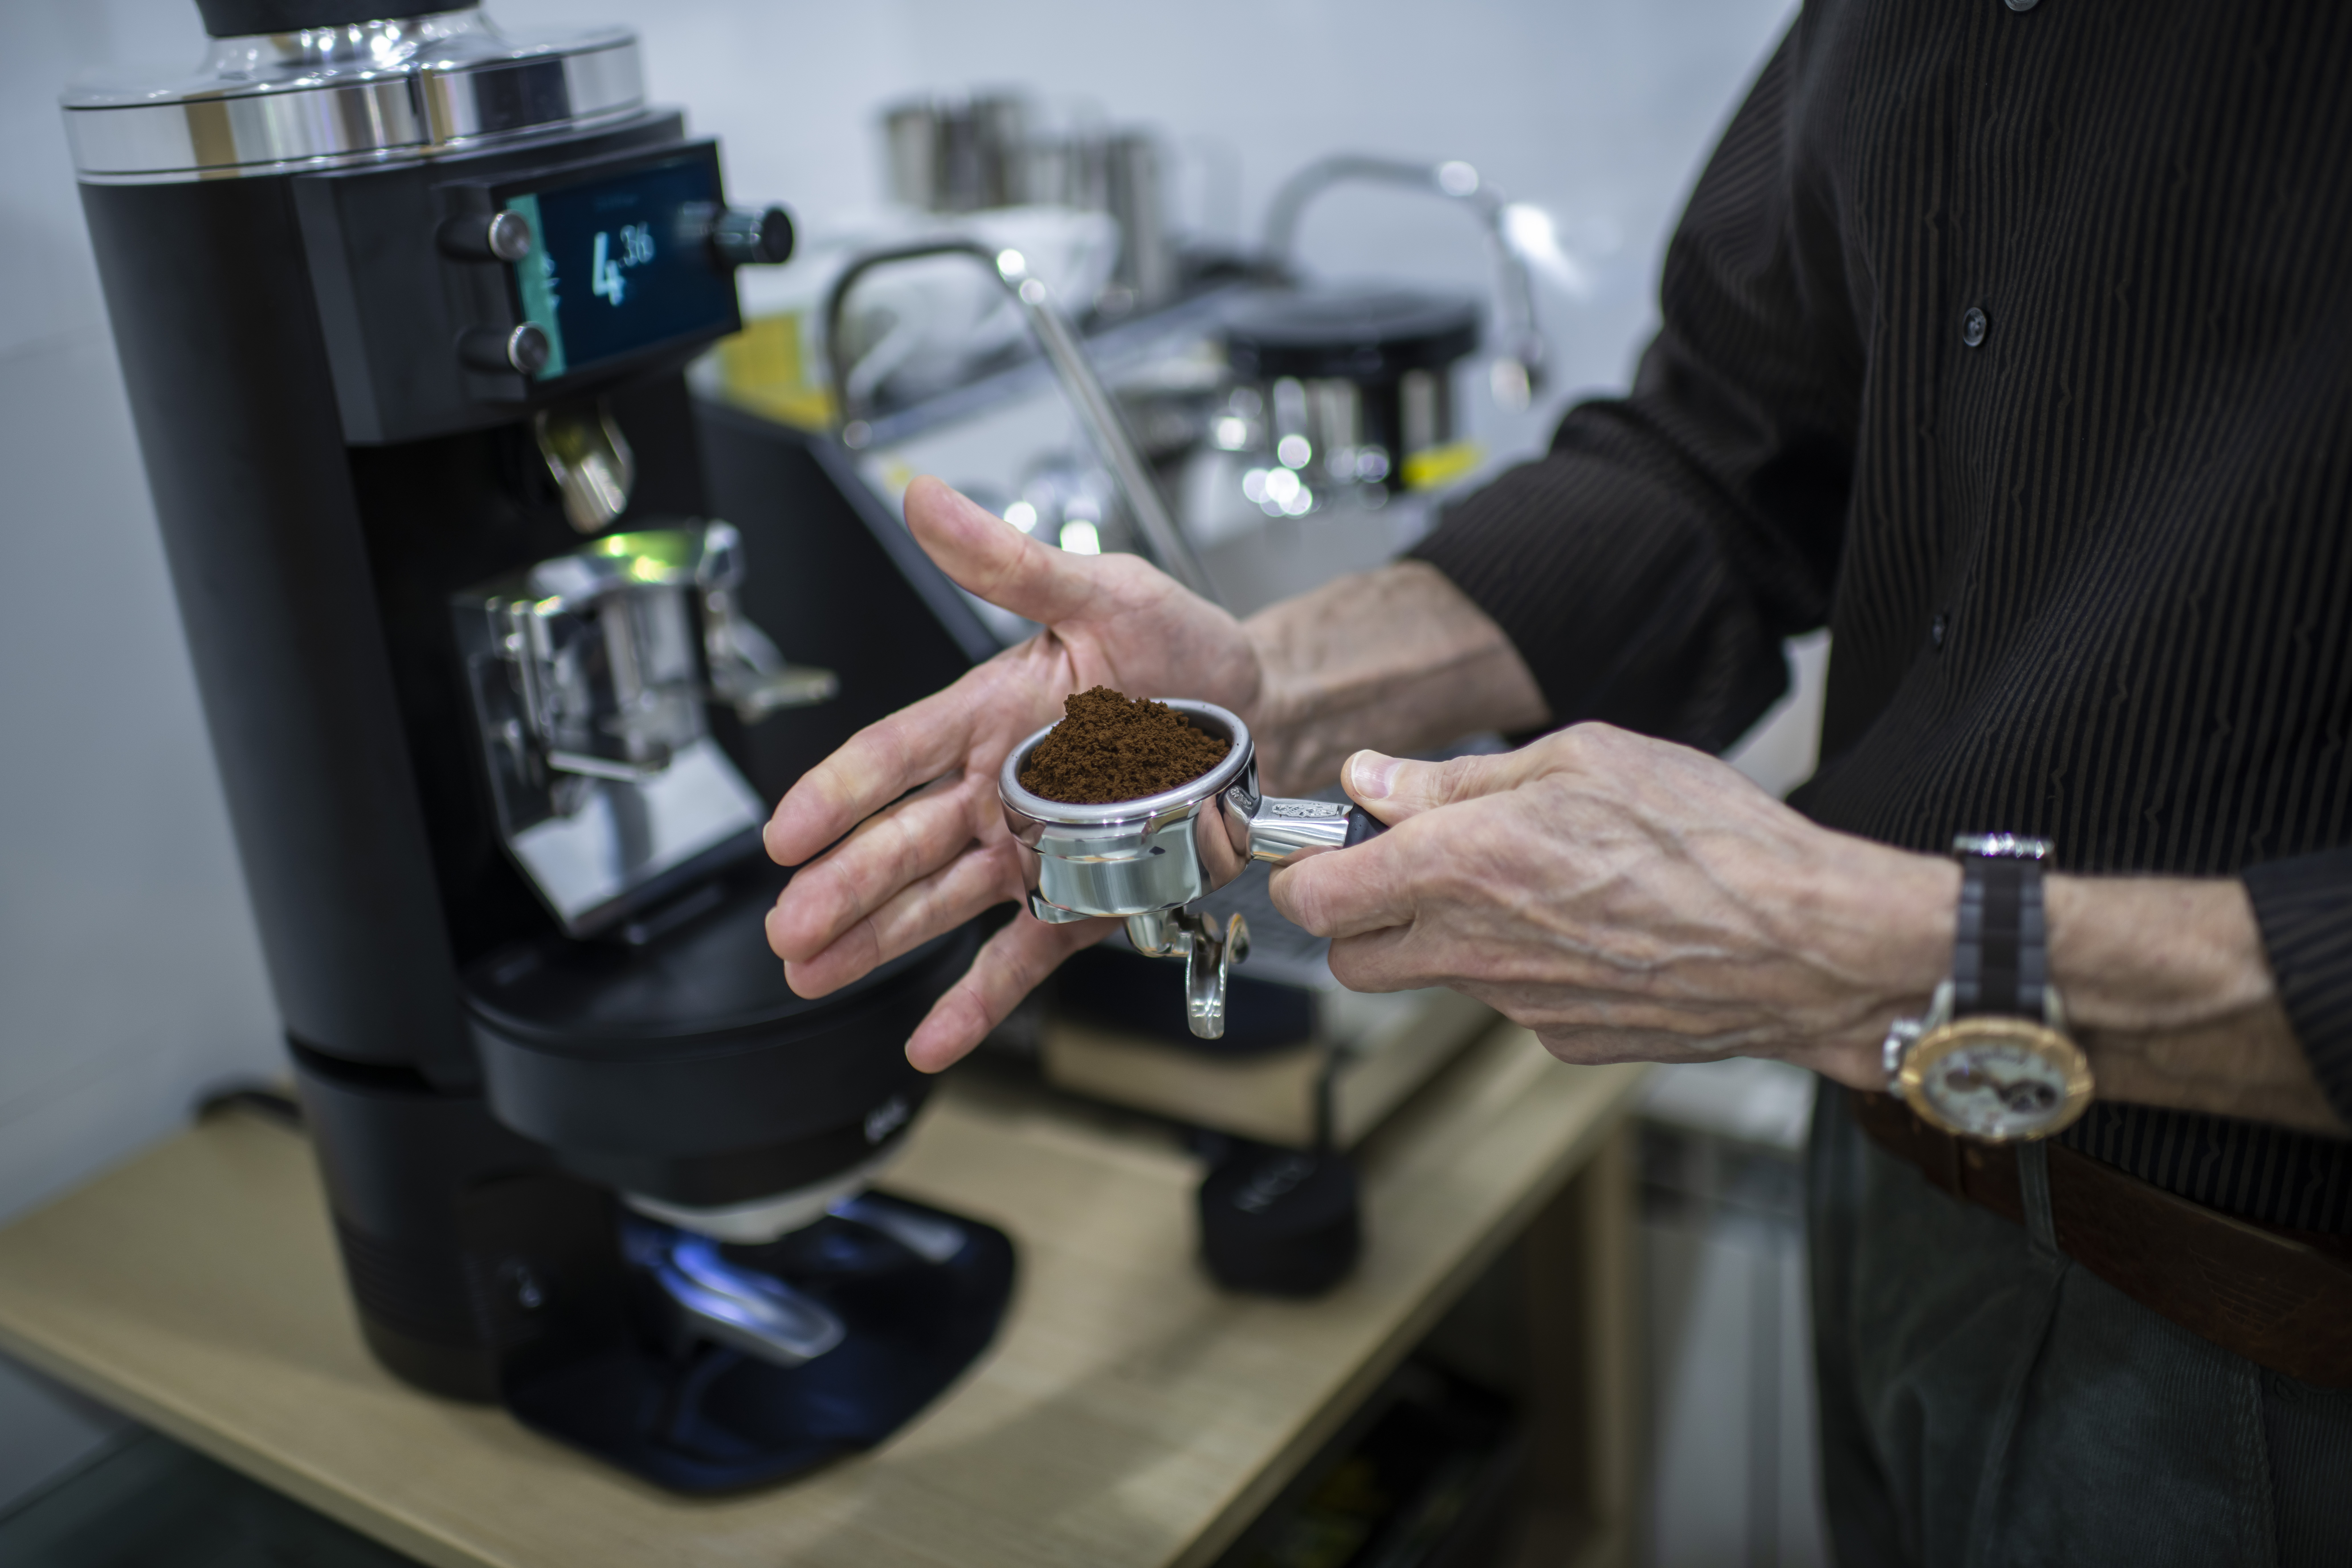 Prepara un café como un barista con una cafetera express para tu hogar